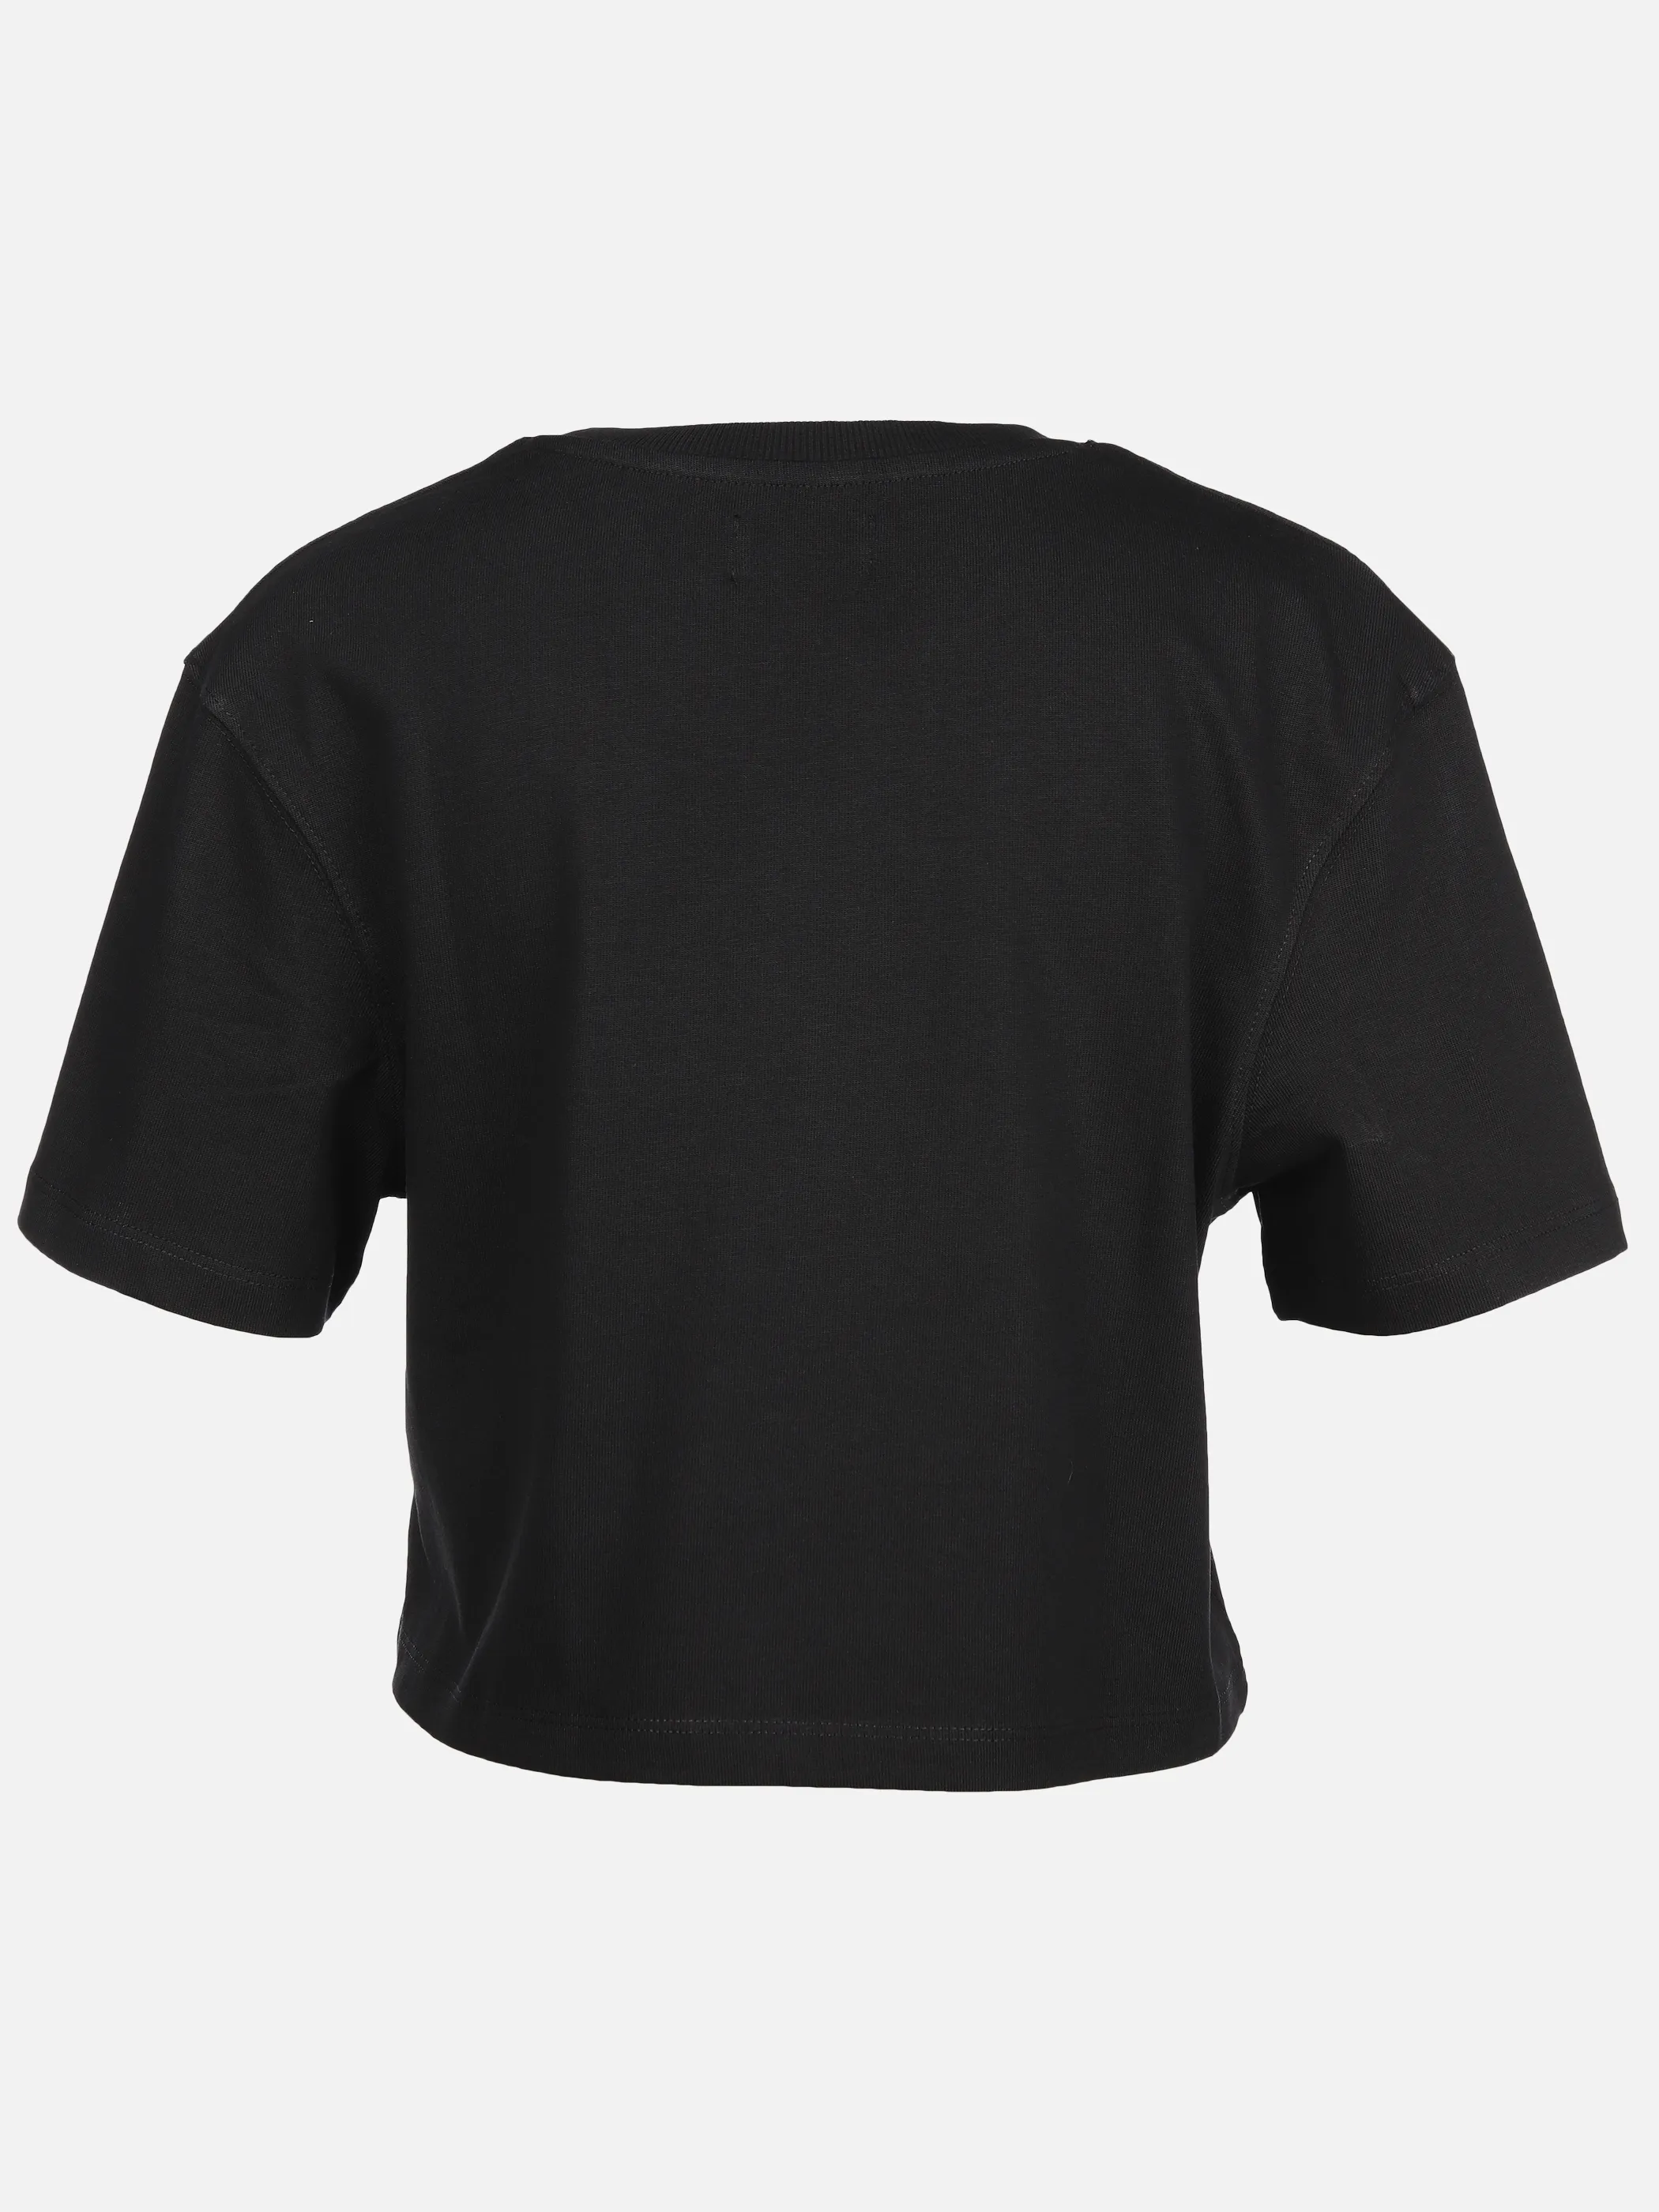 IX-O YF-Da T-Shirt Schwarz 890371 BLACK 2